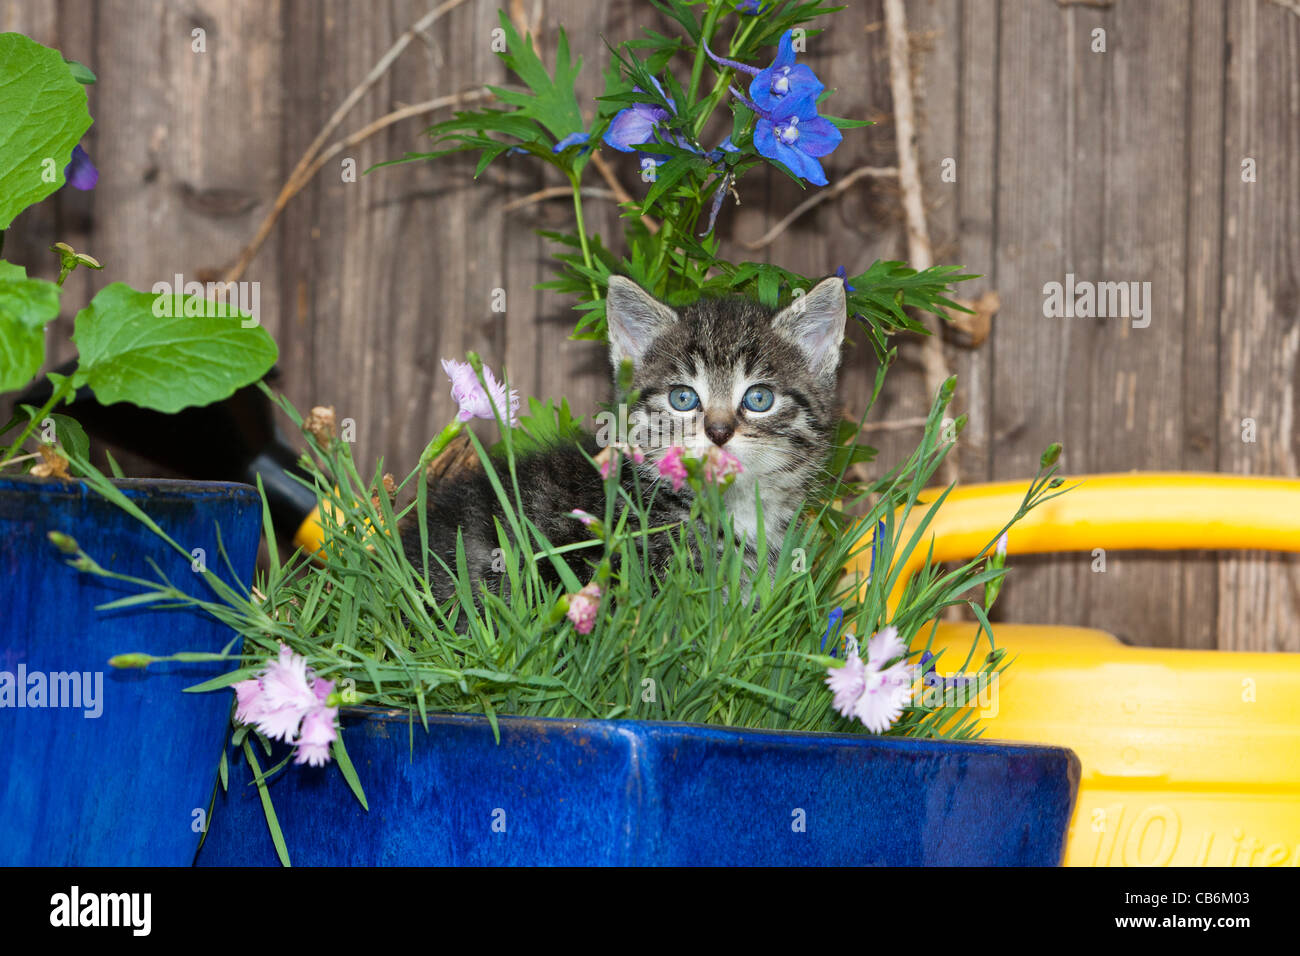 Kitten, sitting amongst flowers in plant pot, Lower Saxony, Germany Stock Photo